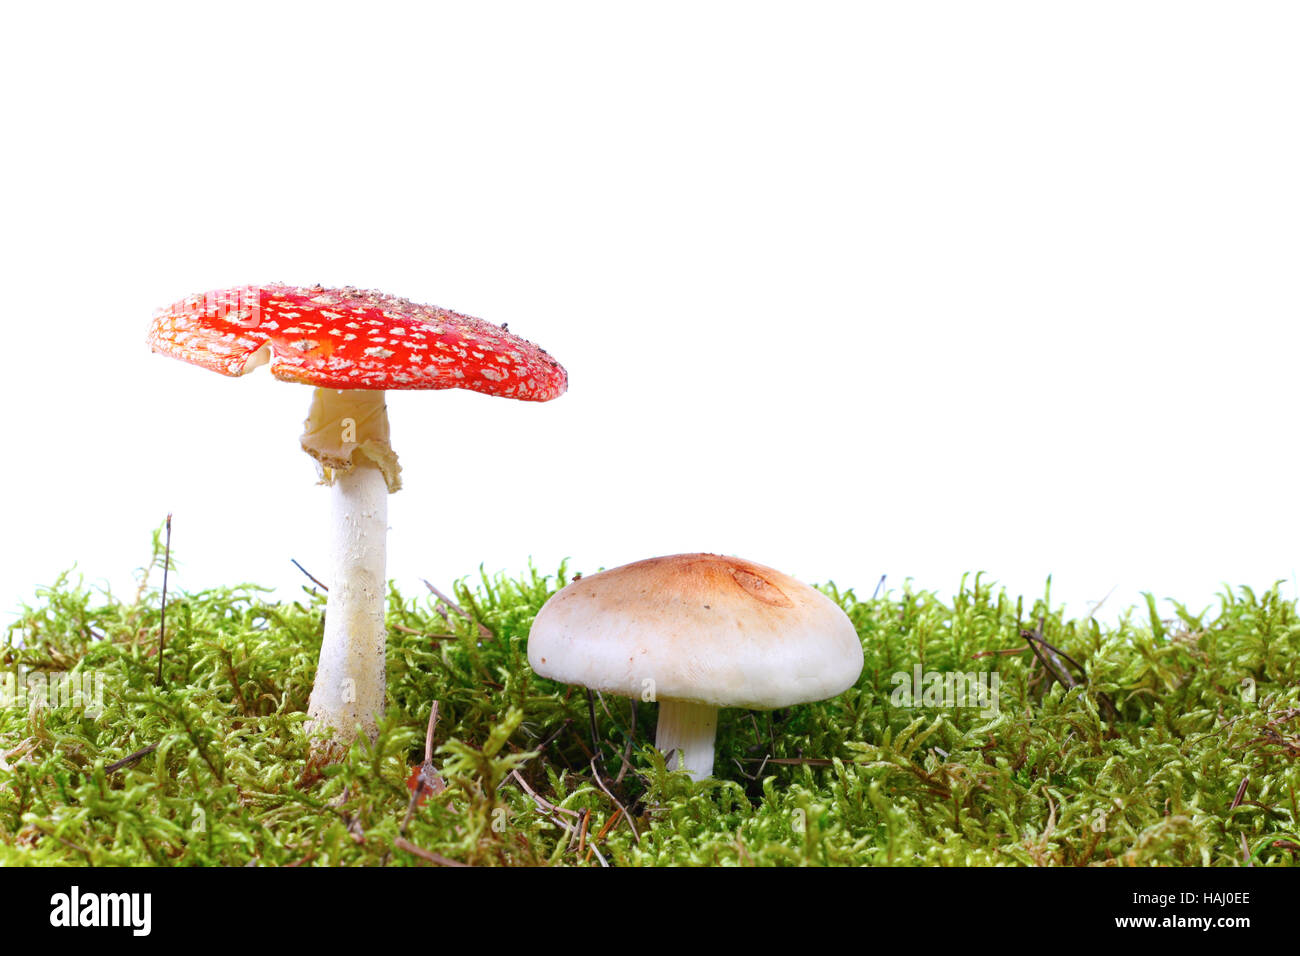 Mushrooms in moss Stock Photo